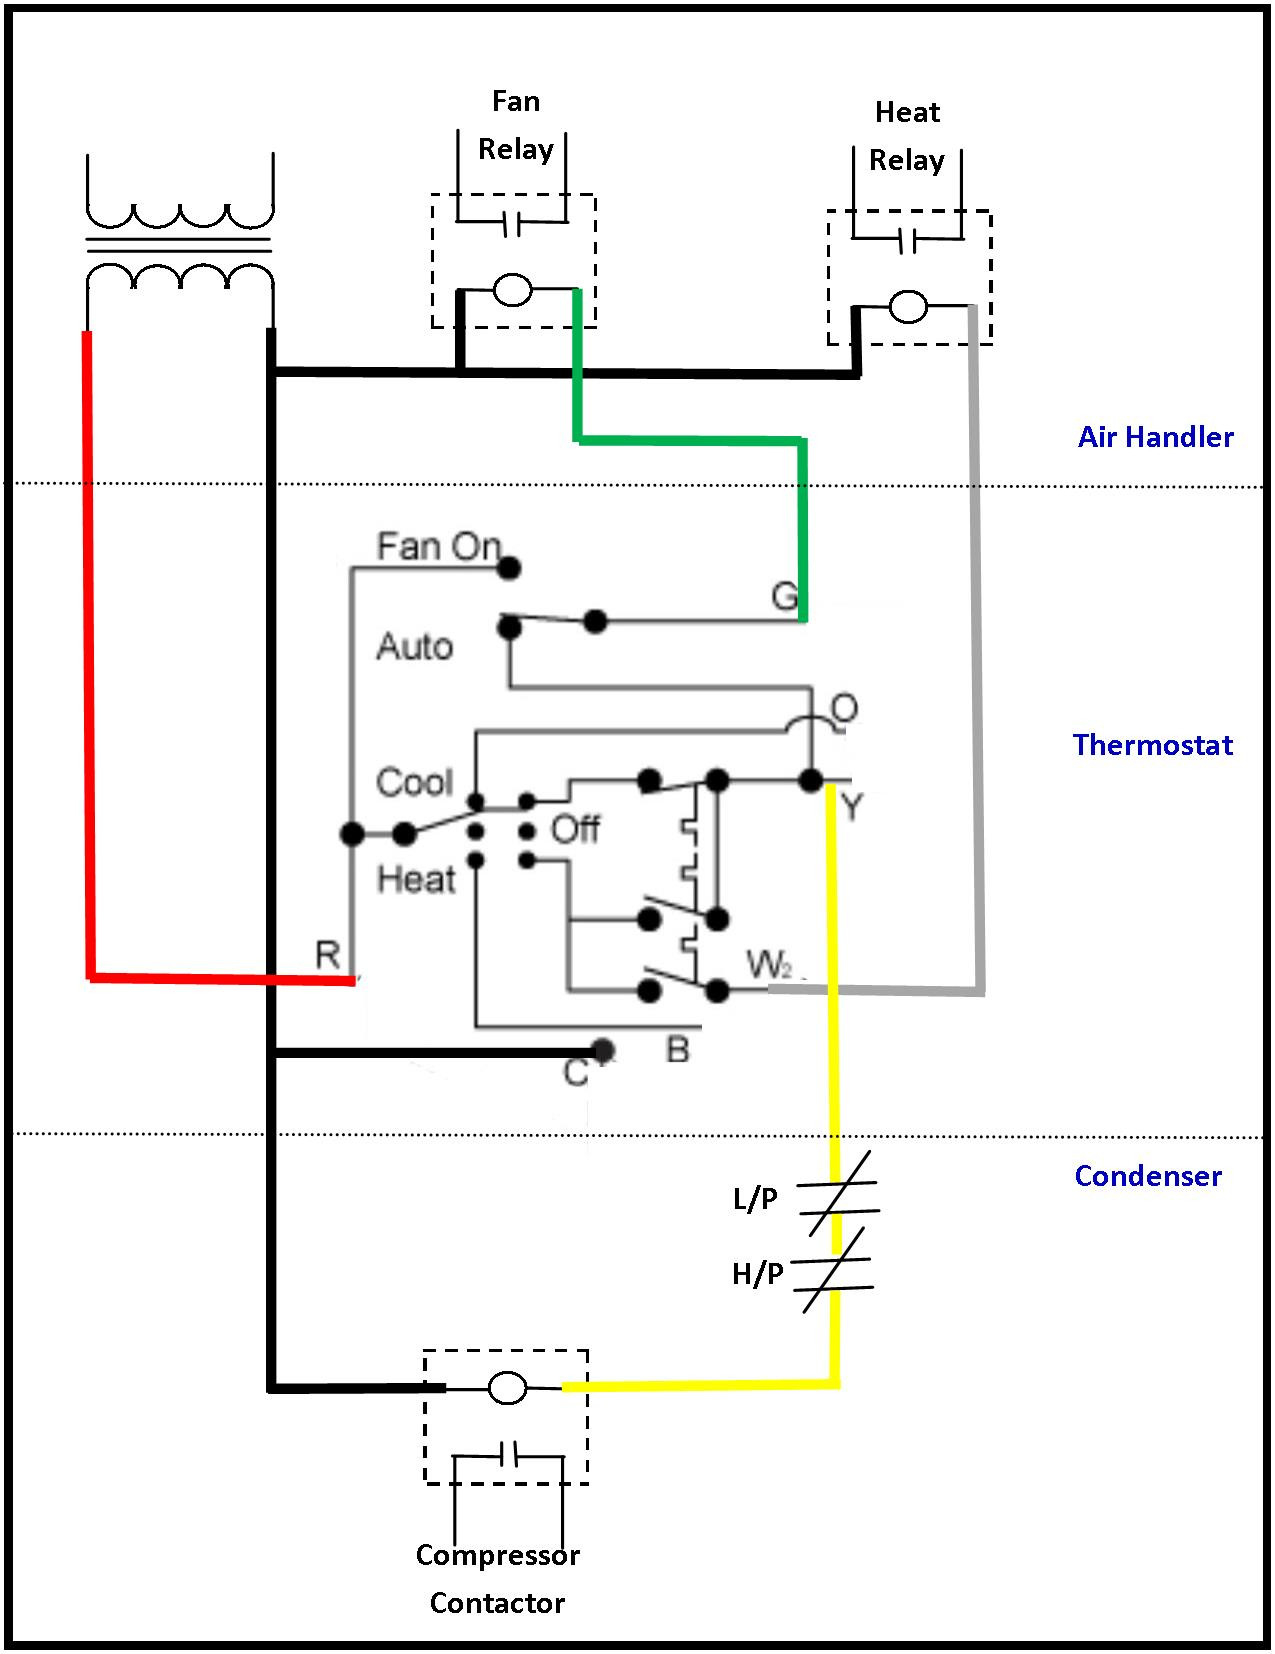 480V To 120V Transformer Wiring Diagram 59 Inspirational 480v To 120v Transformer Wiring Diagram Pictures